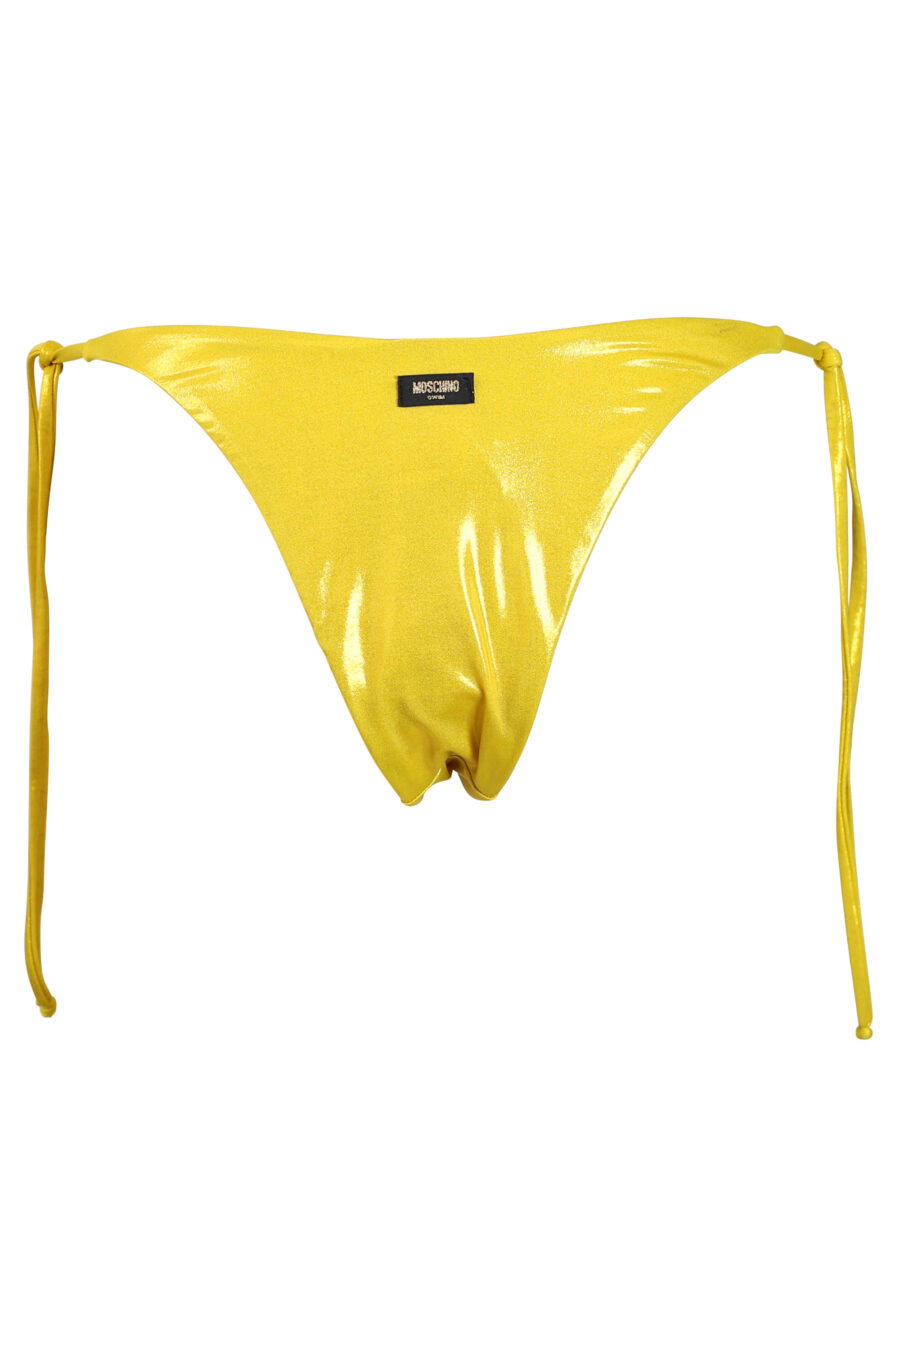 Bright yellow bikini bottoms with side tie - 889316269680 2